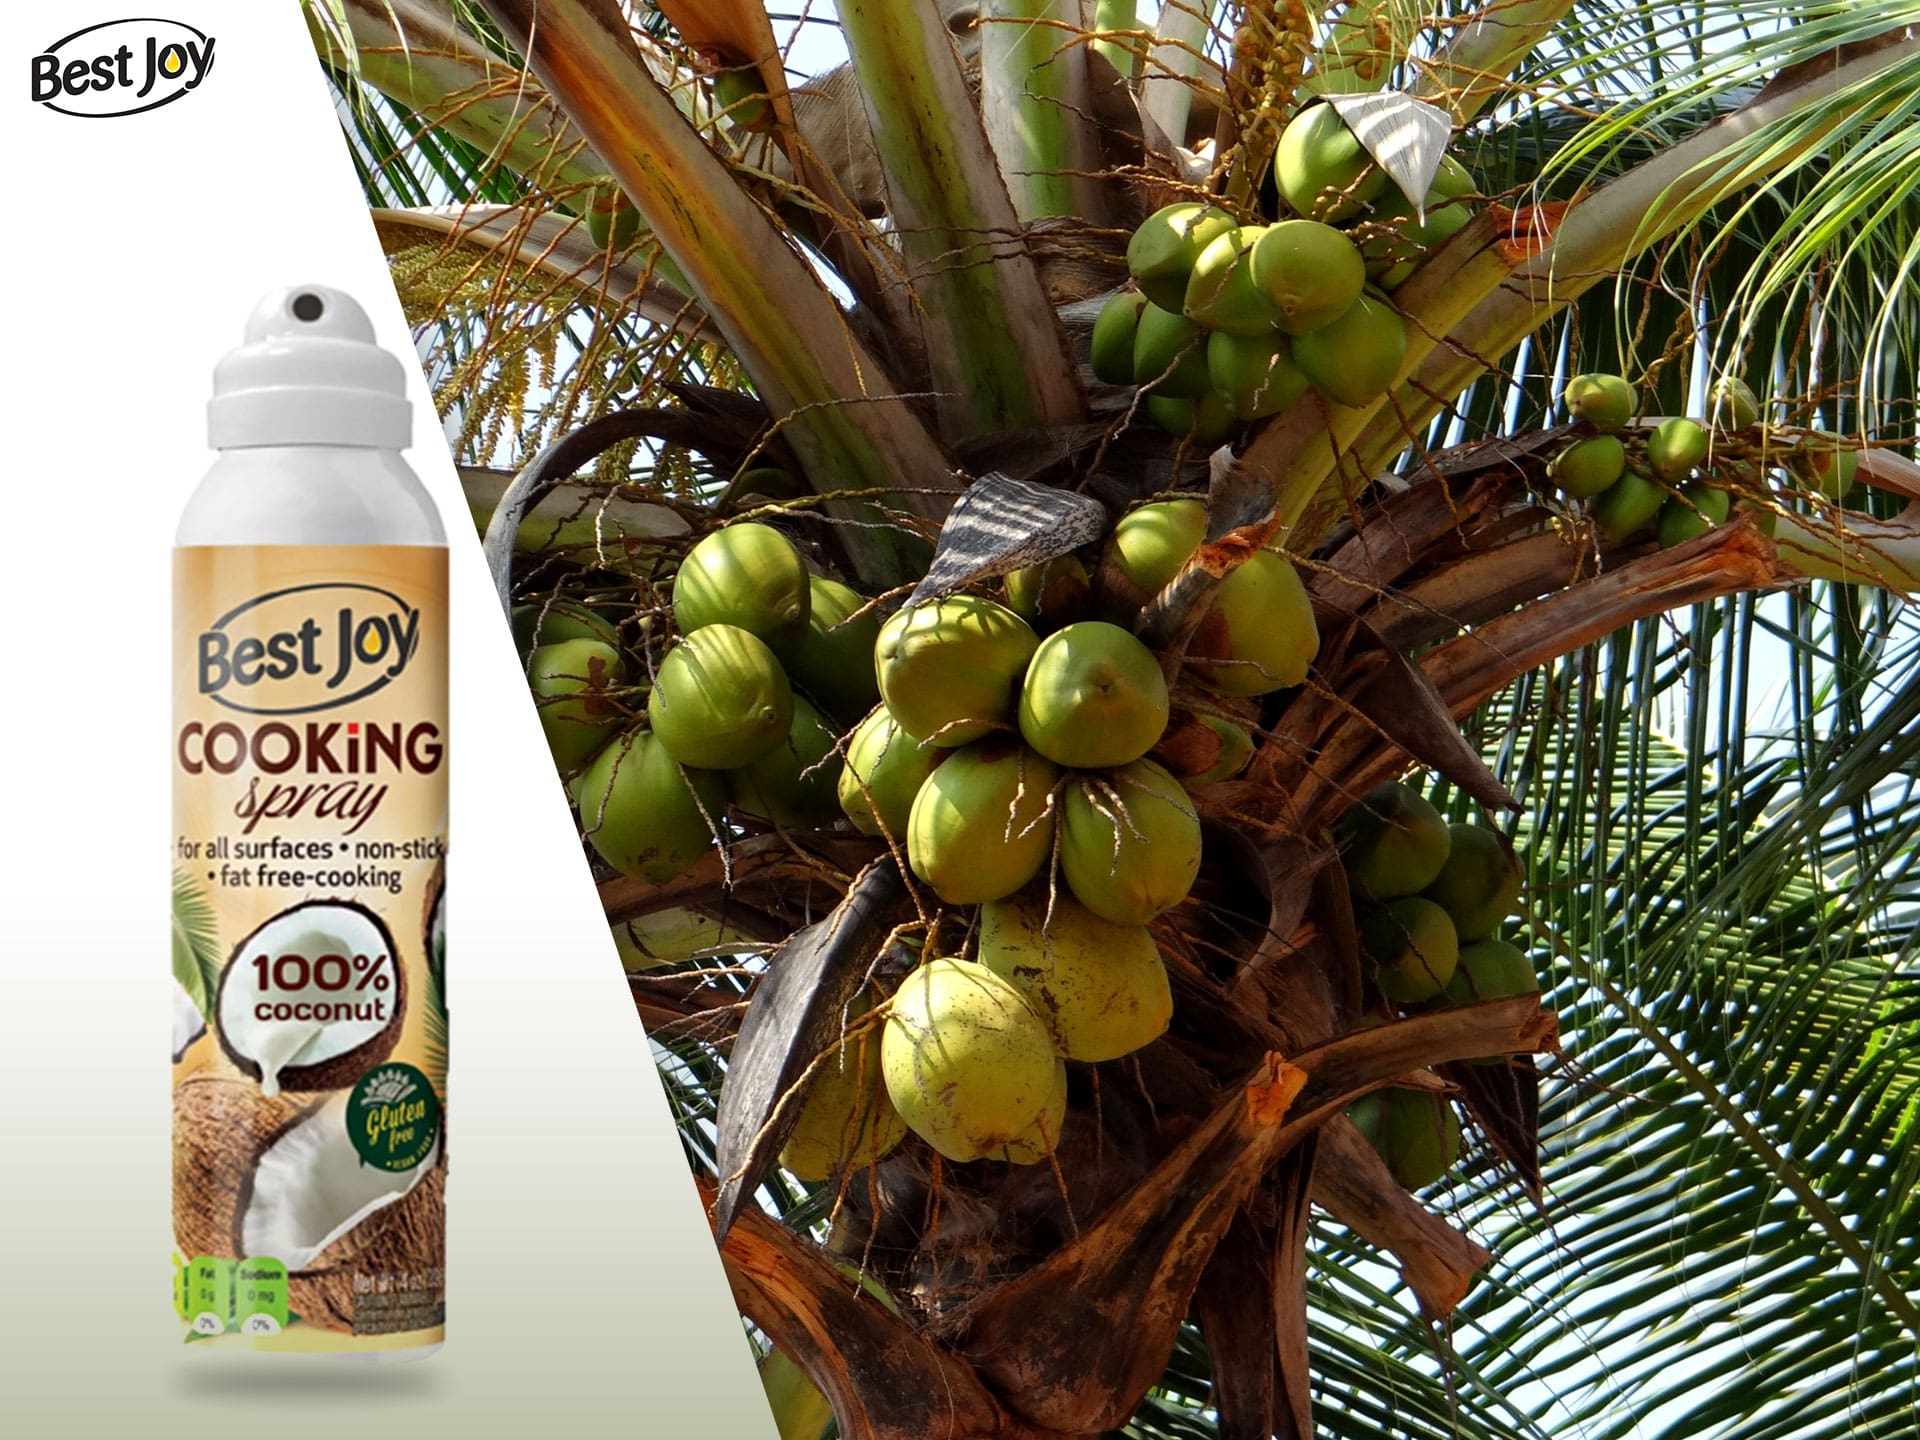 Best Joy Coconut Oil Cooking Spray